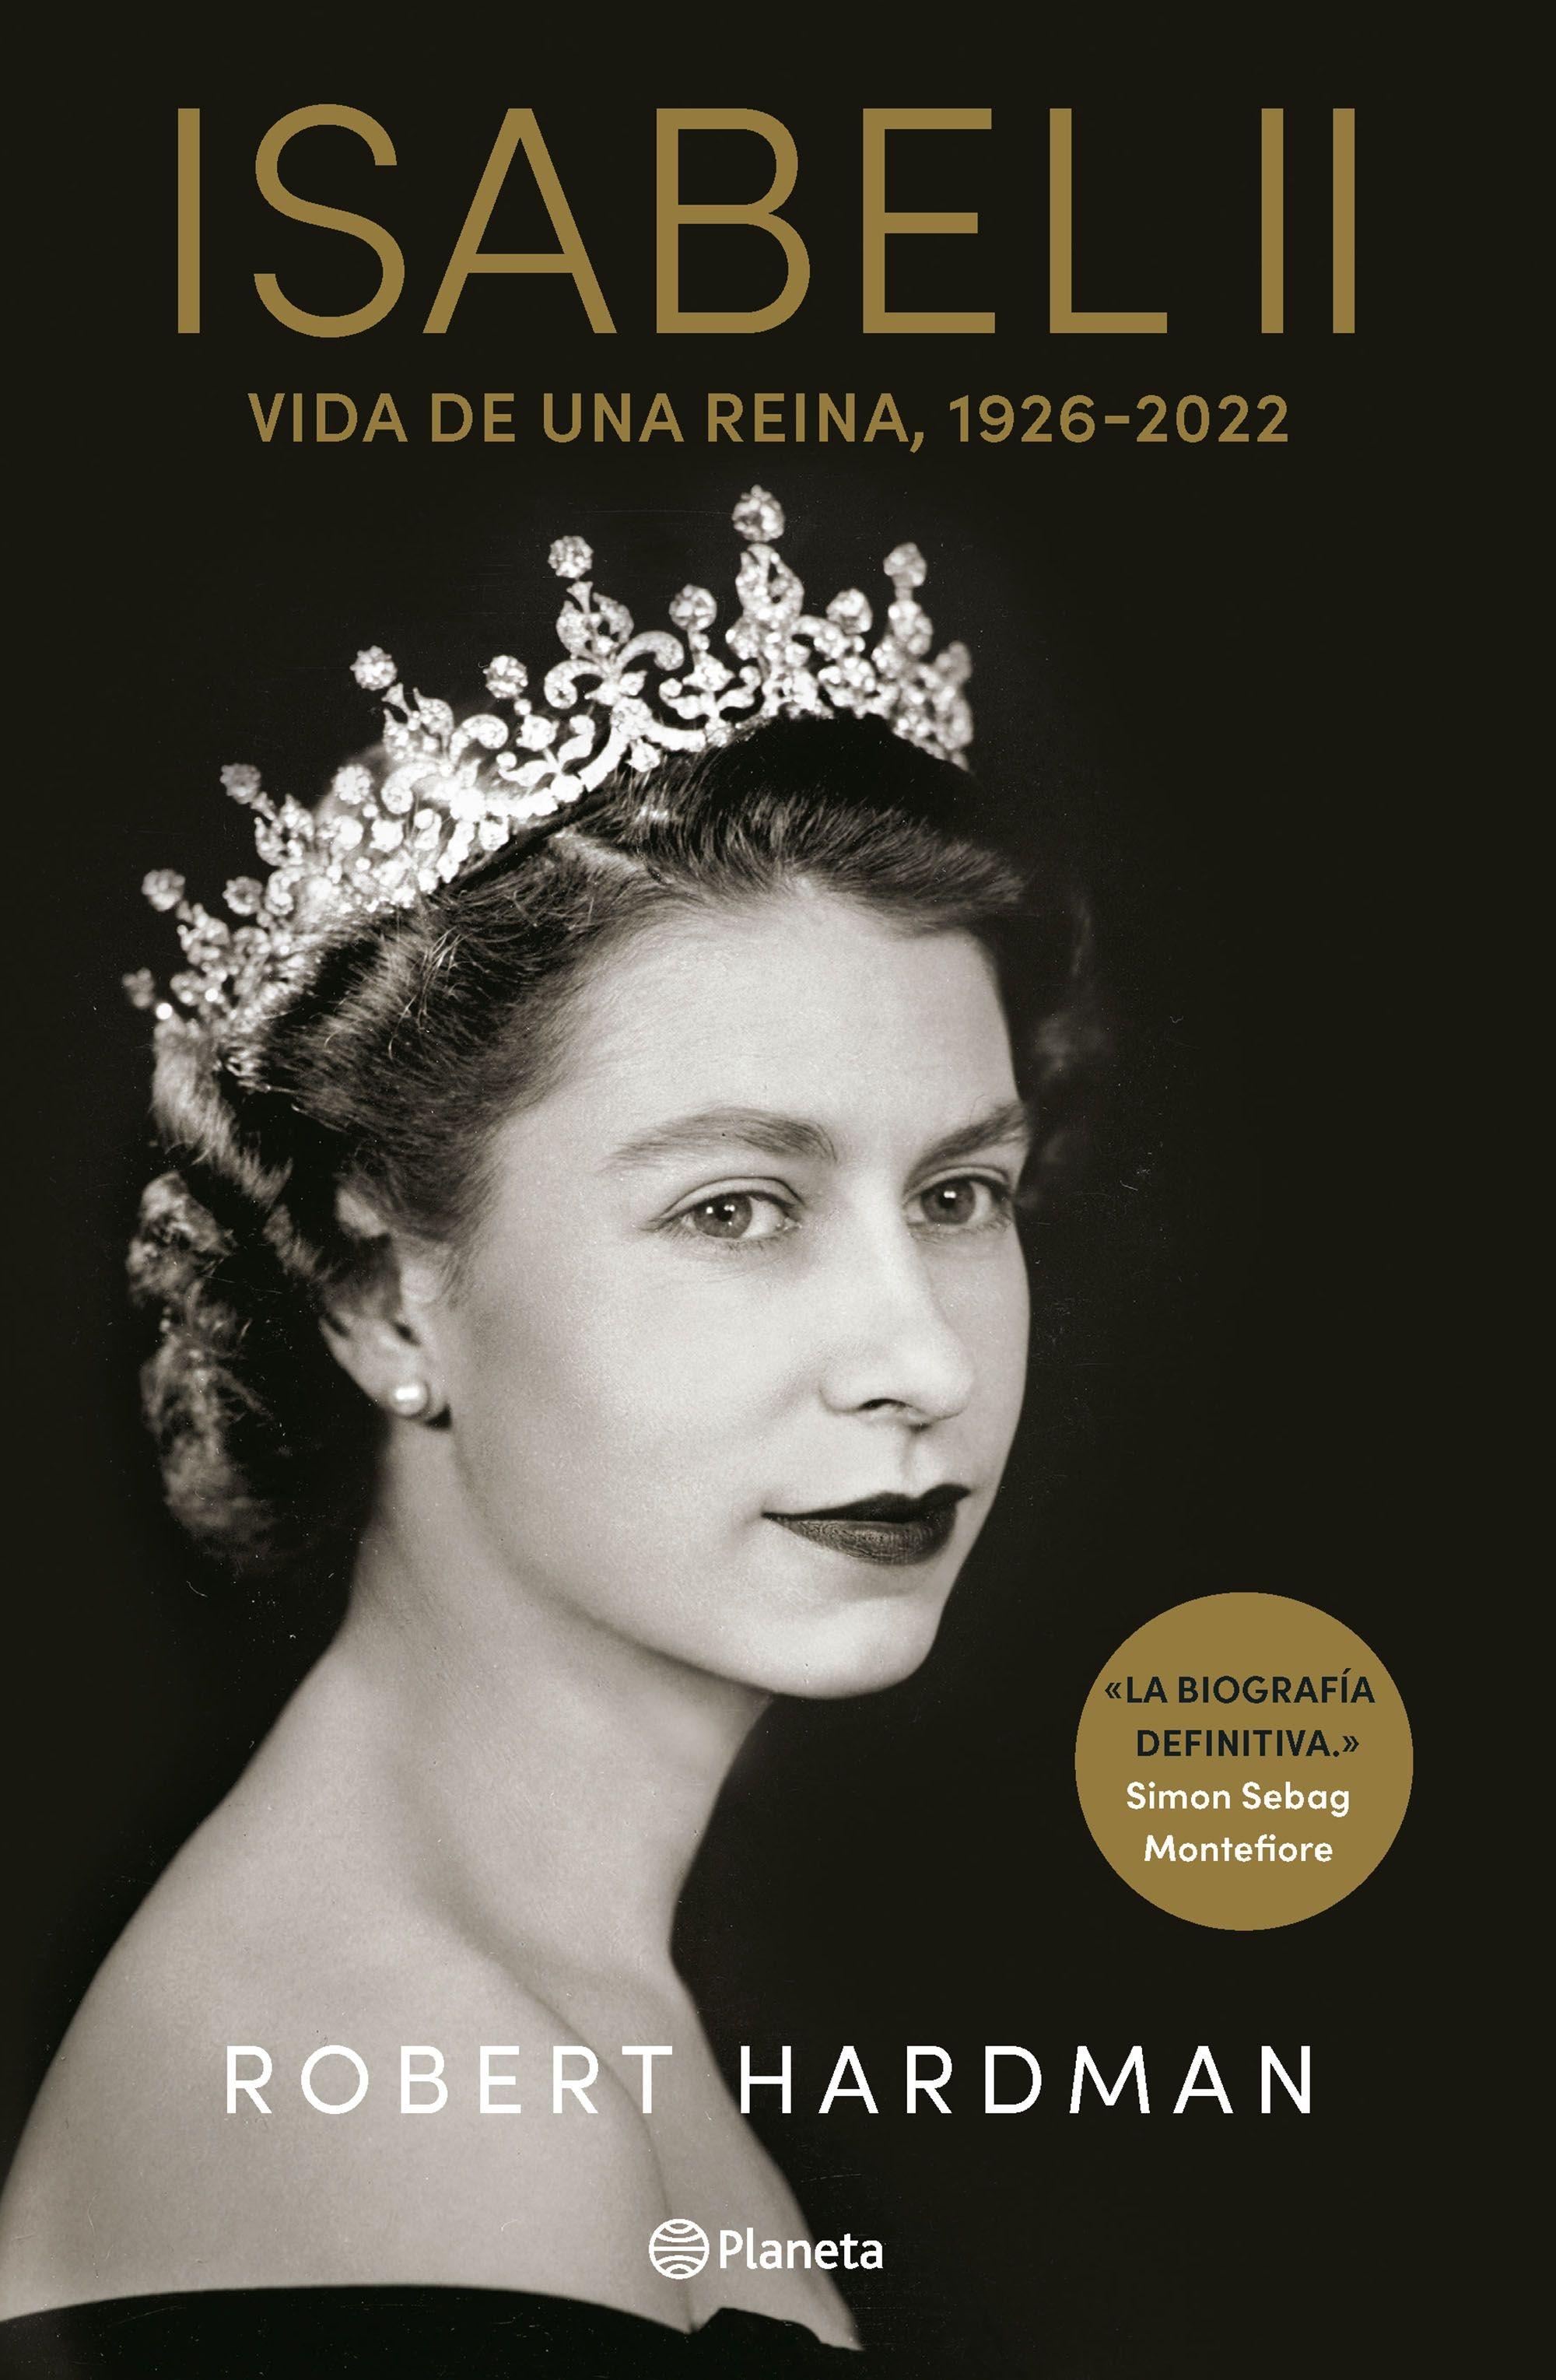 Isabel Ii "Vida de una Reina, 1926-2022"